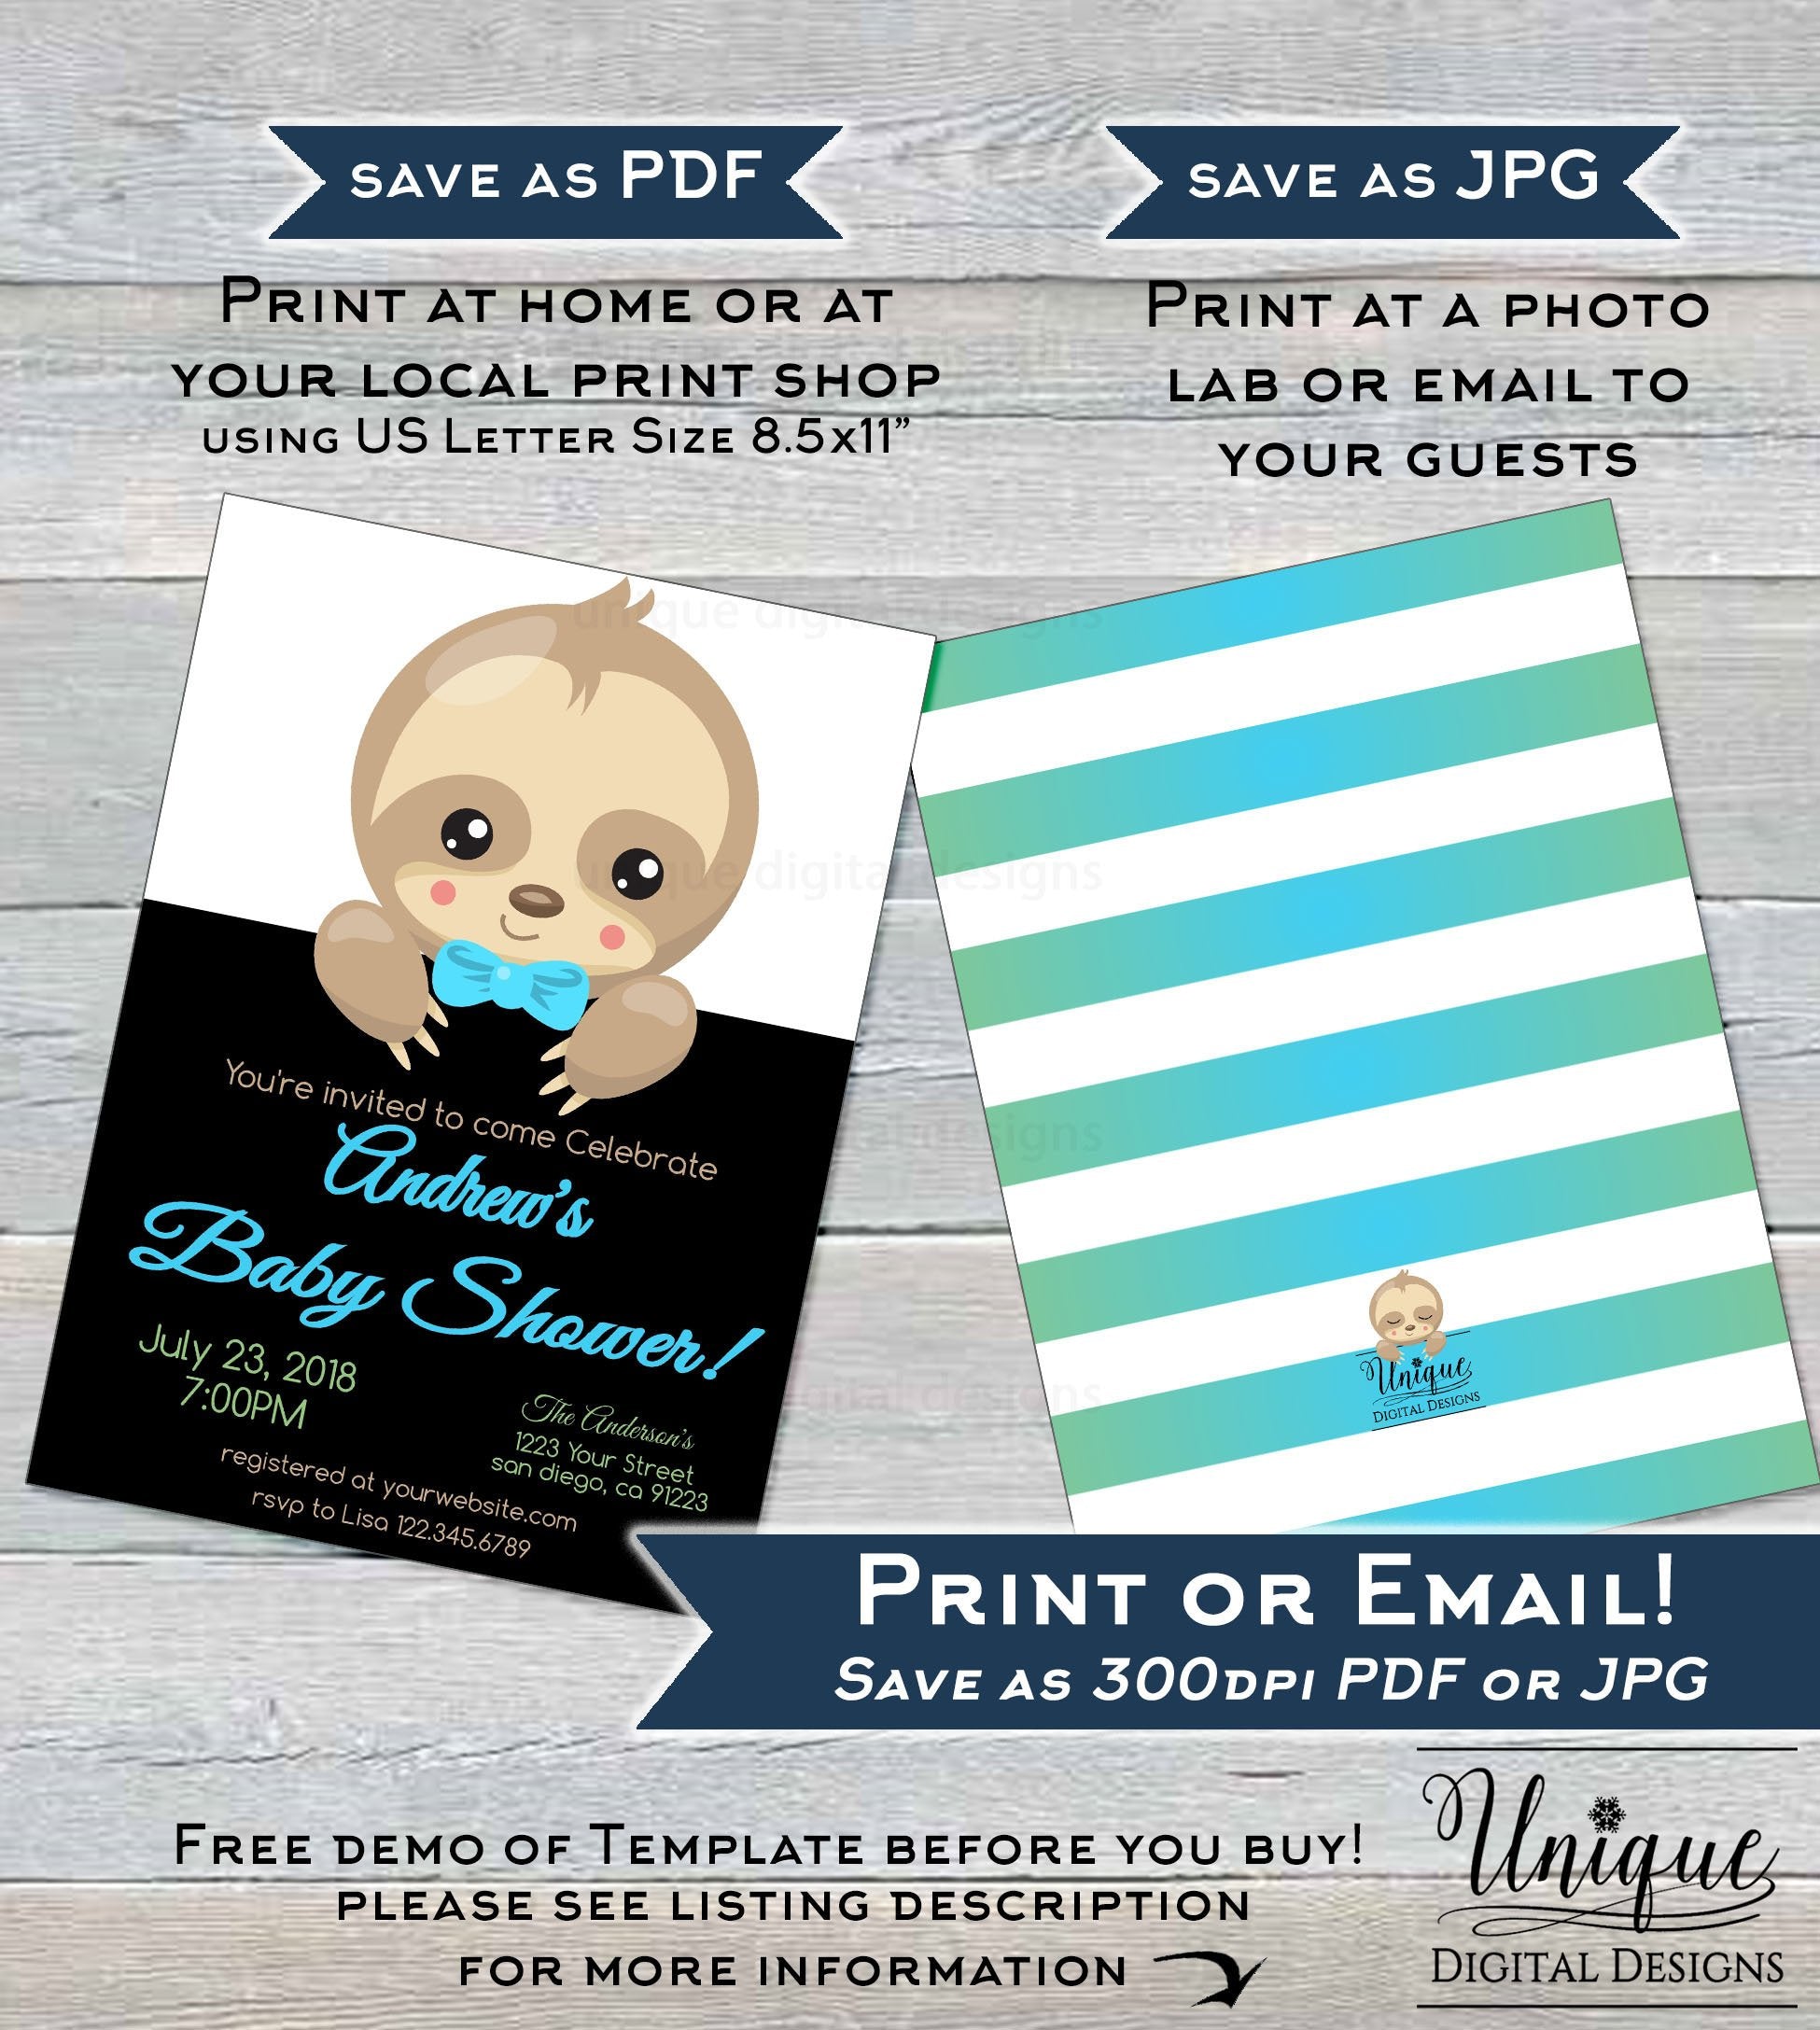 FREE Printable) - Roblox Baby Shower Invitation Templates  Free printable  baby shower invitations, Free birthday stuff, Baby shower invitation  templates